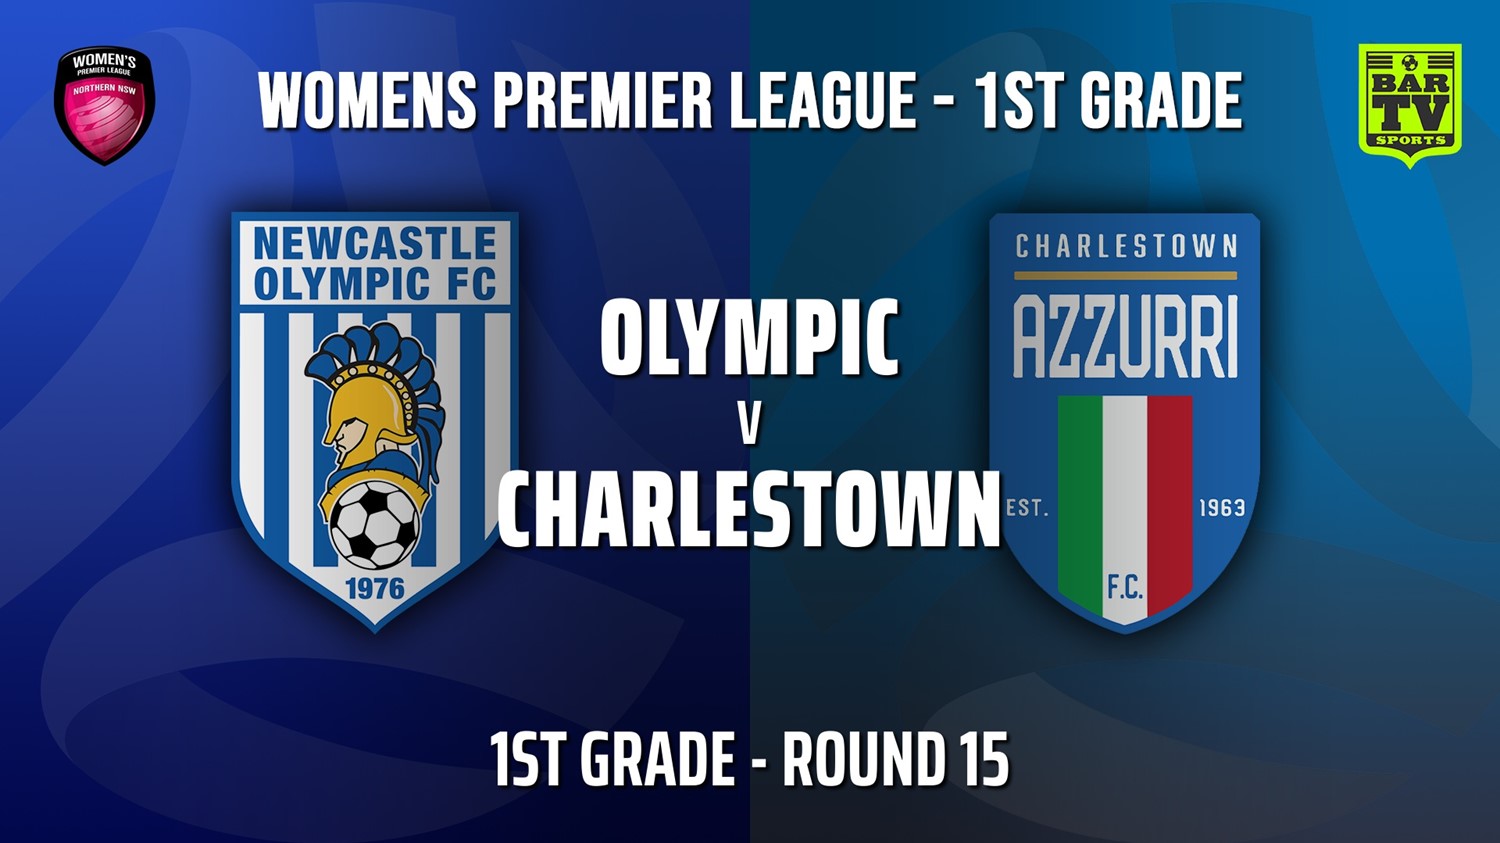 220908-NNSW Womens Round 15 - 1st Grade - Newcastle Olympic FC W v Charlestown Azzurri FC W Minigame Slate Image